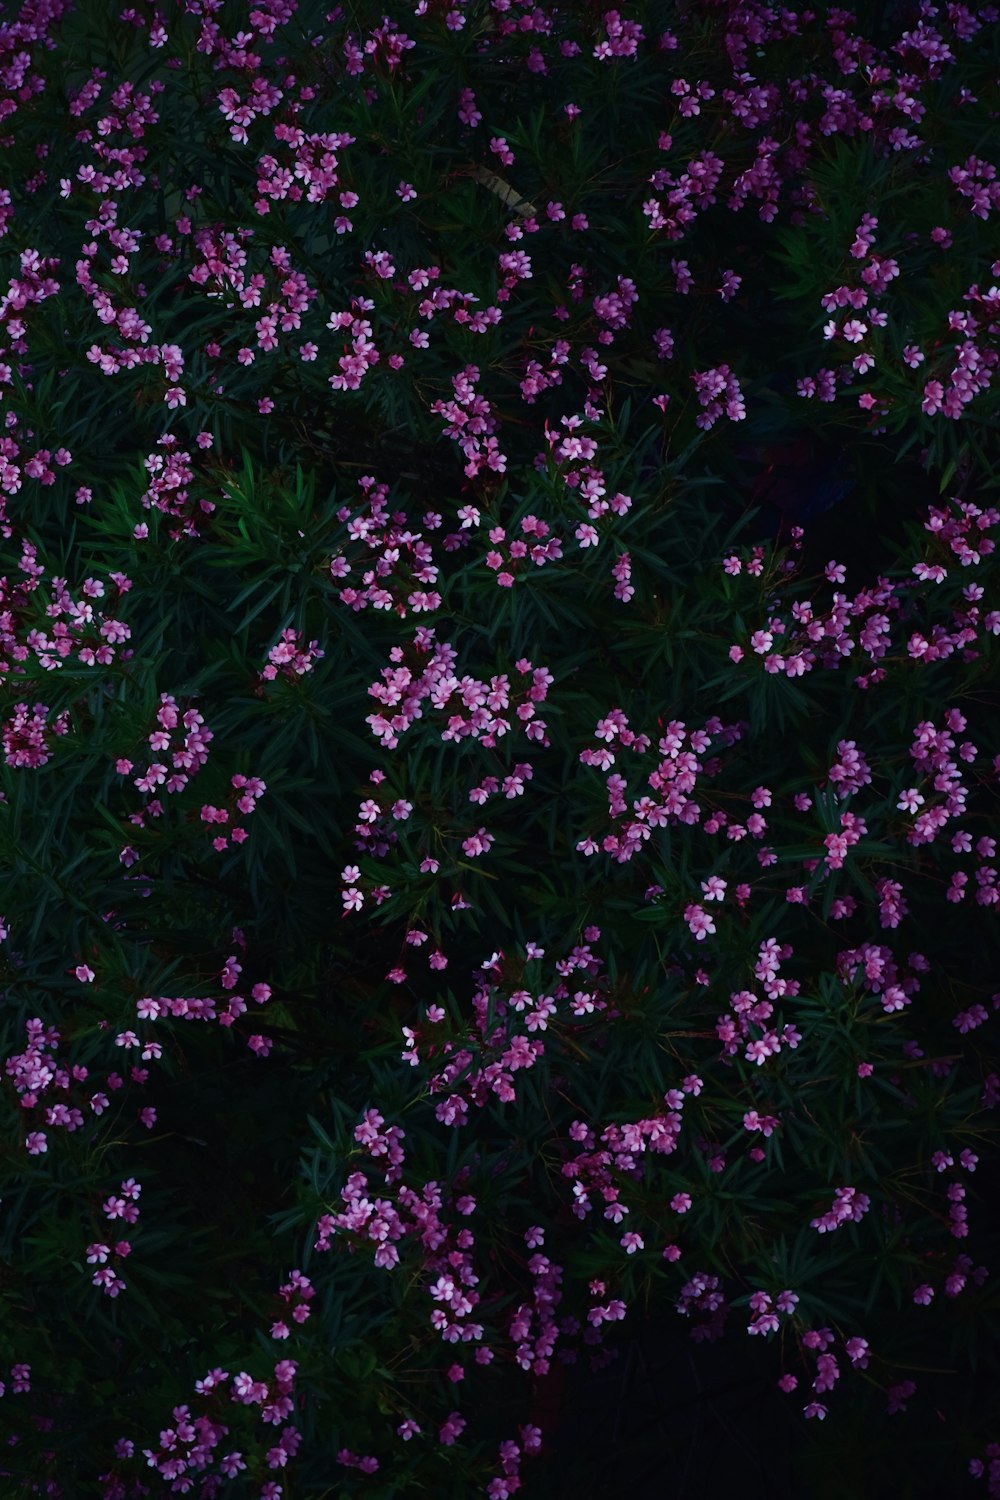 a bunch of small purple flowers in a field